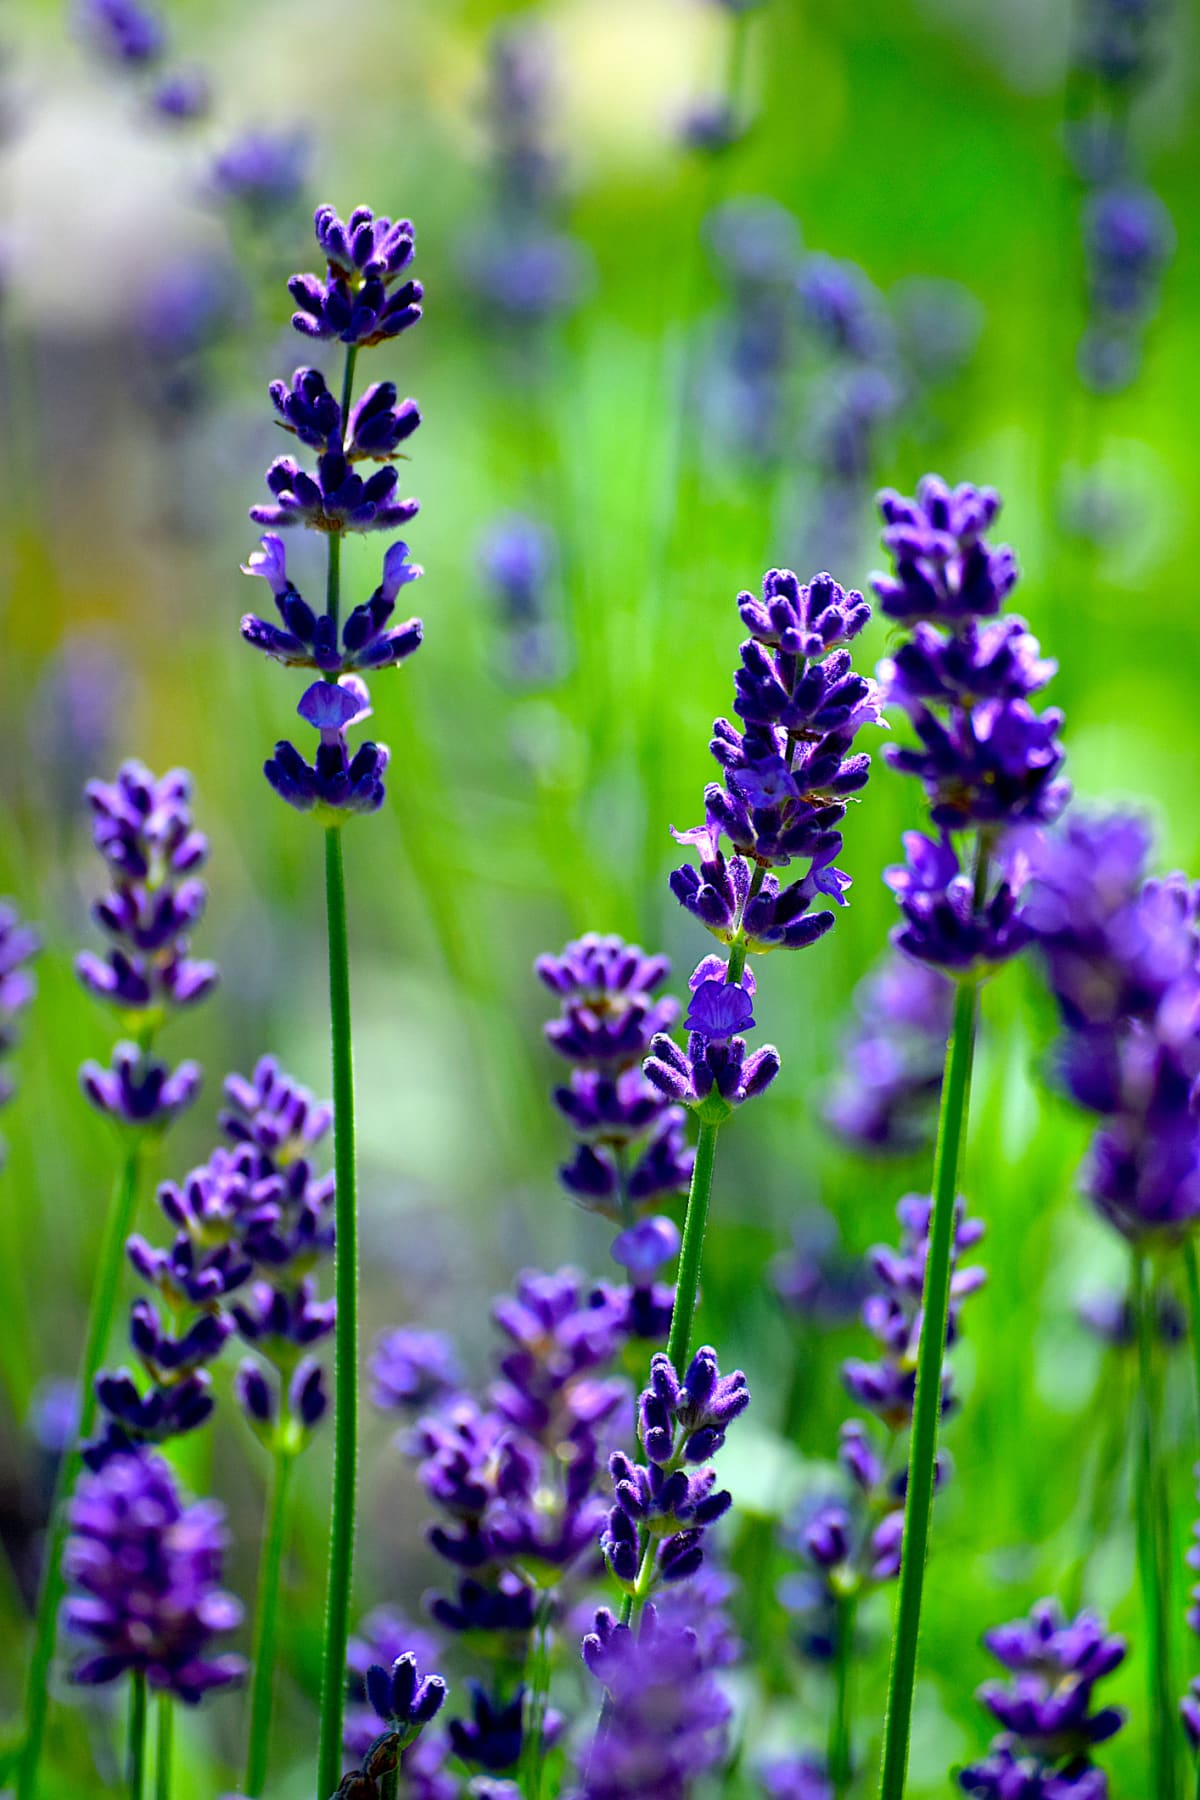 Stalks of lavender with purple flowers